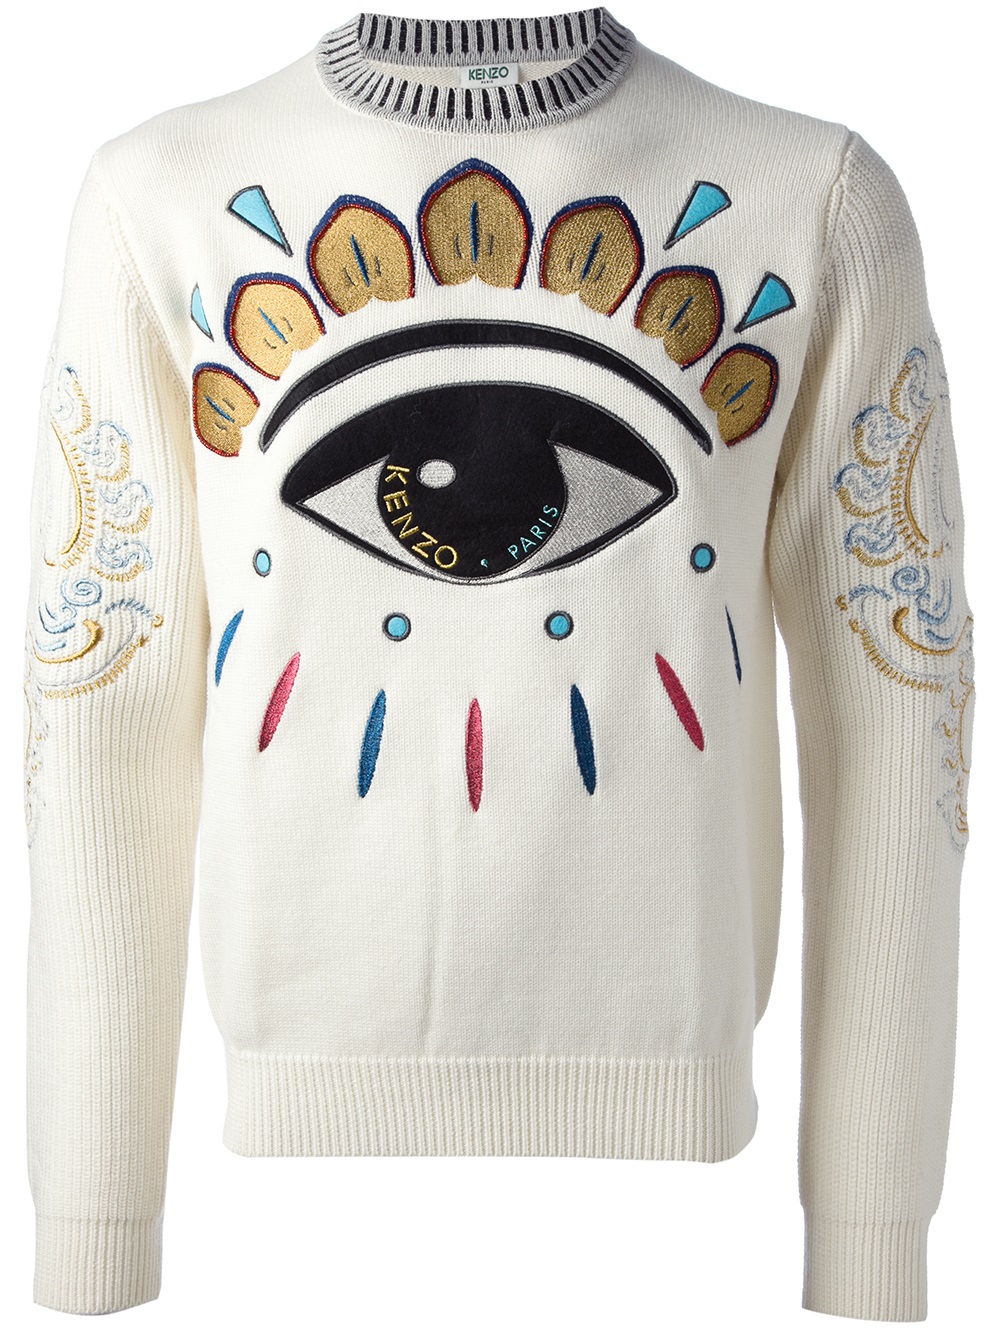 KENZO Eye Sweater in White for Men - Lyst